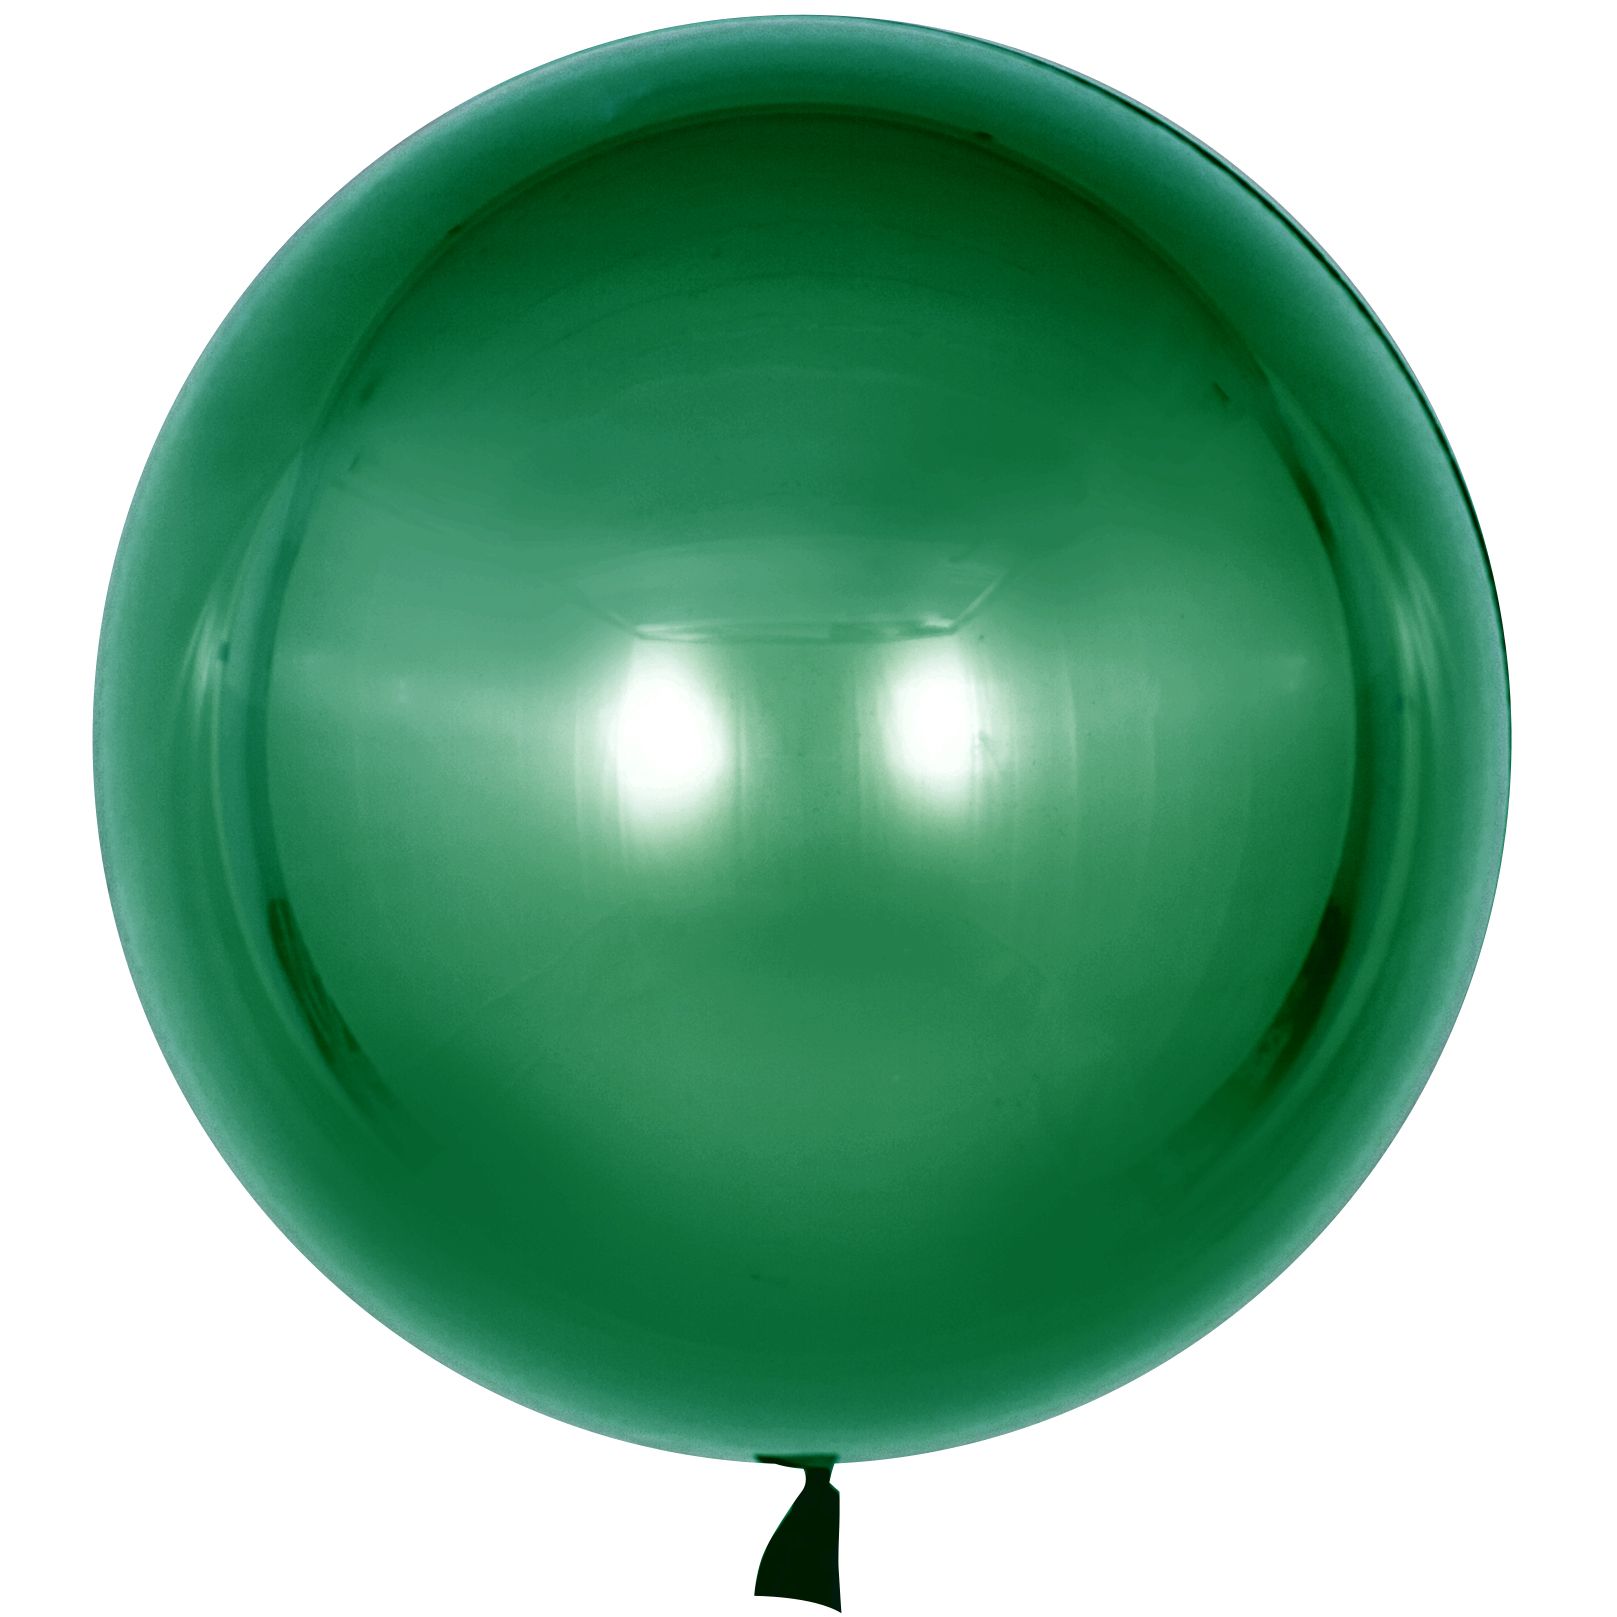 G шара на шару. Шар деко Баблс. Шар сфера Баблс зеленый. Falali сфера шар деко Баблс. Нс4-60 сфера надувная.